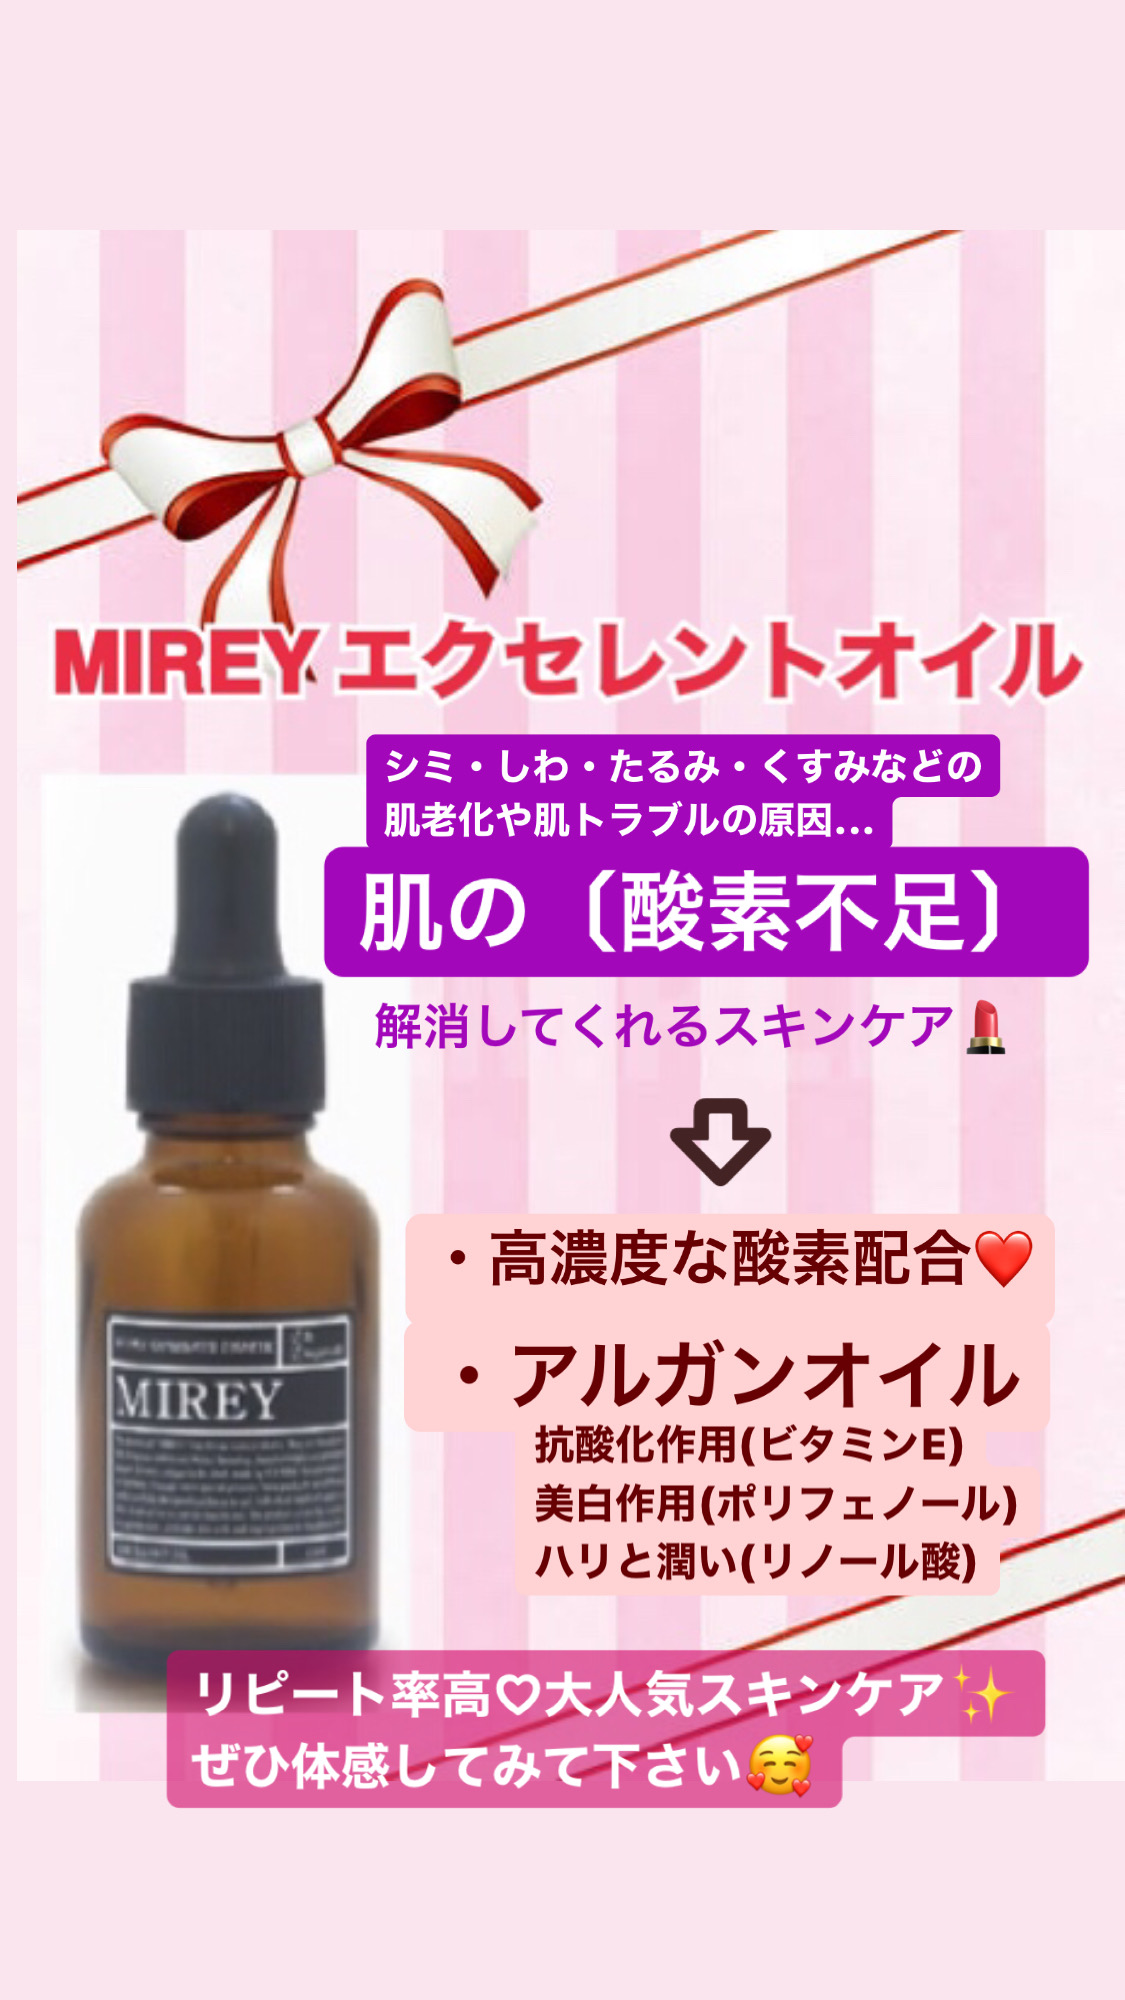 【MIREY】エクセレントオイル☆